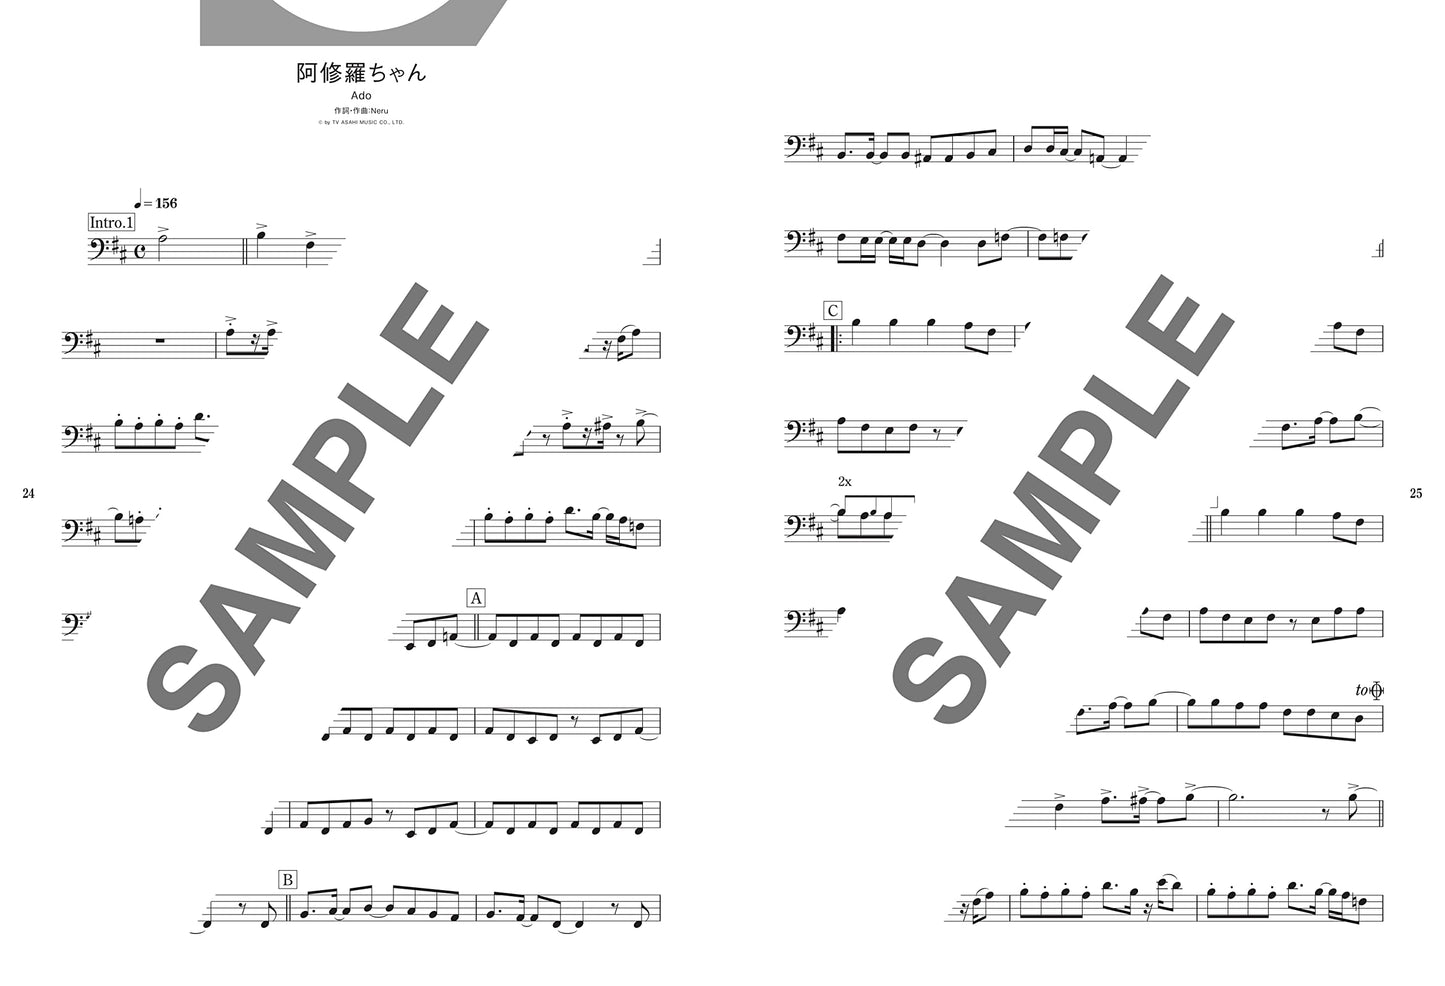 Popular and Standard Repertoire for Tuba Solo(Upper-Intermediate) Sheet Music Book